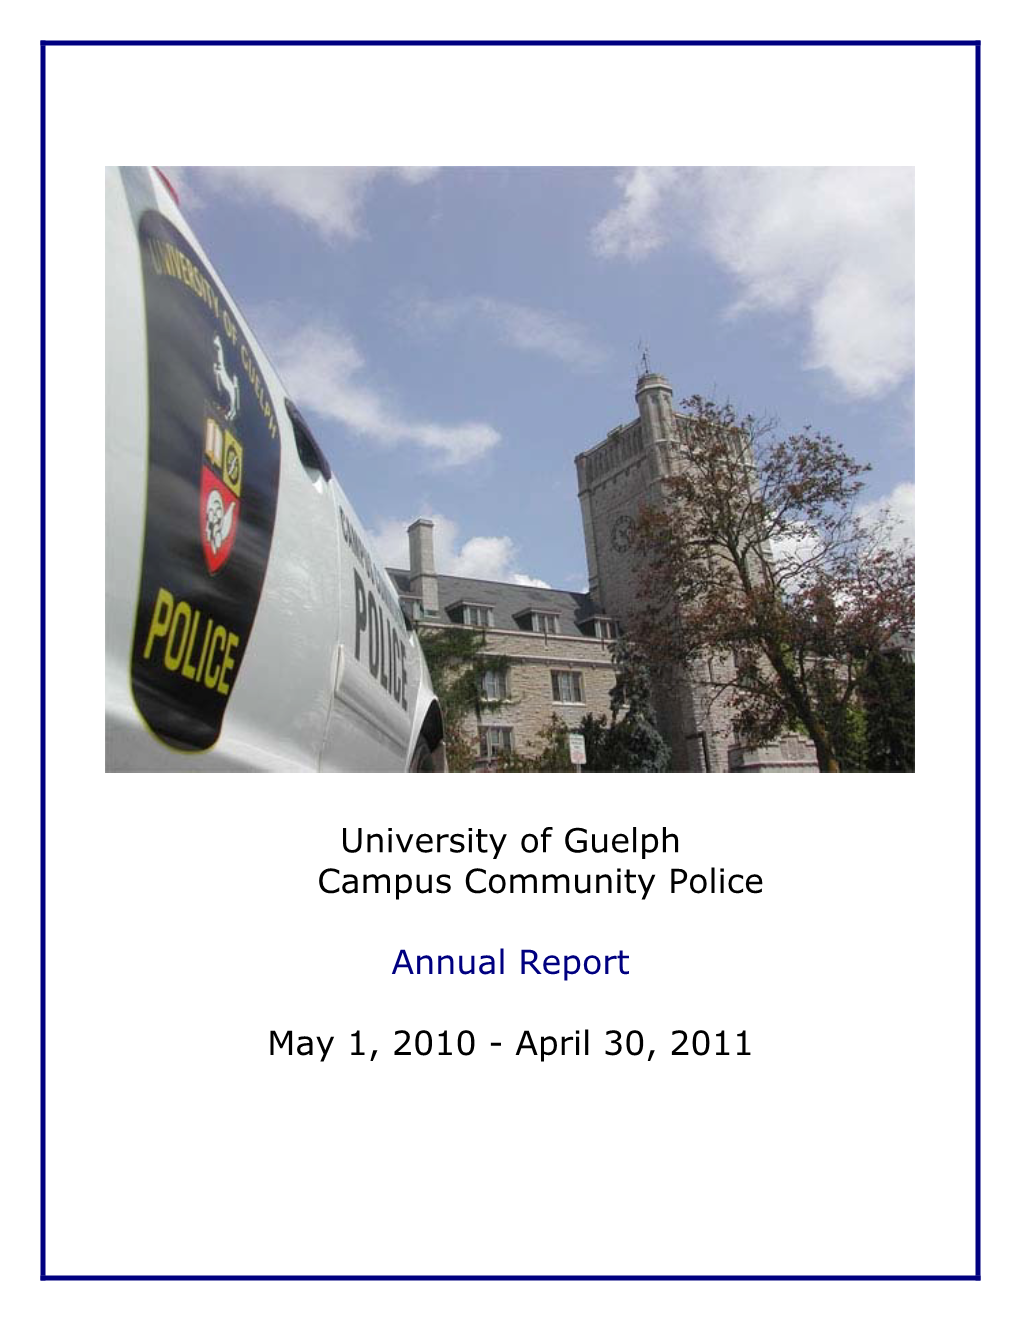 2010-2011 Campus Community Police